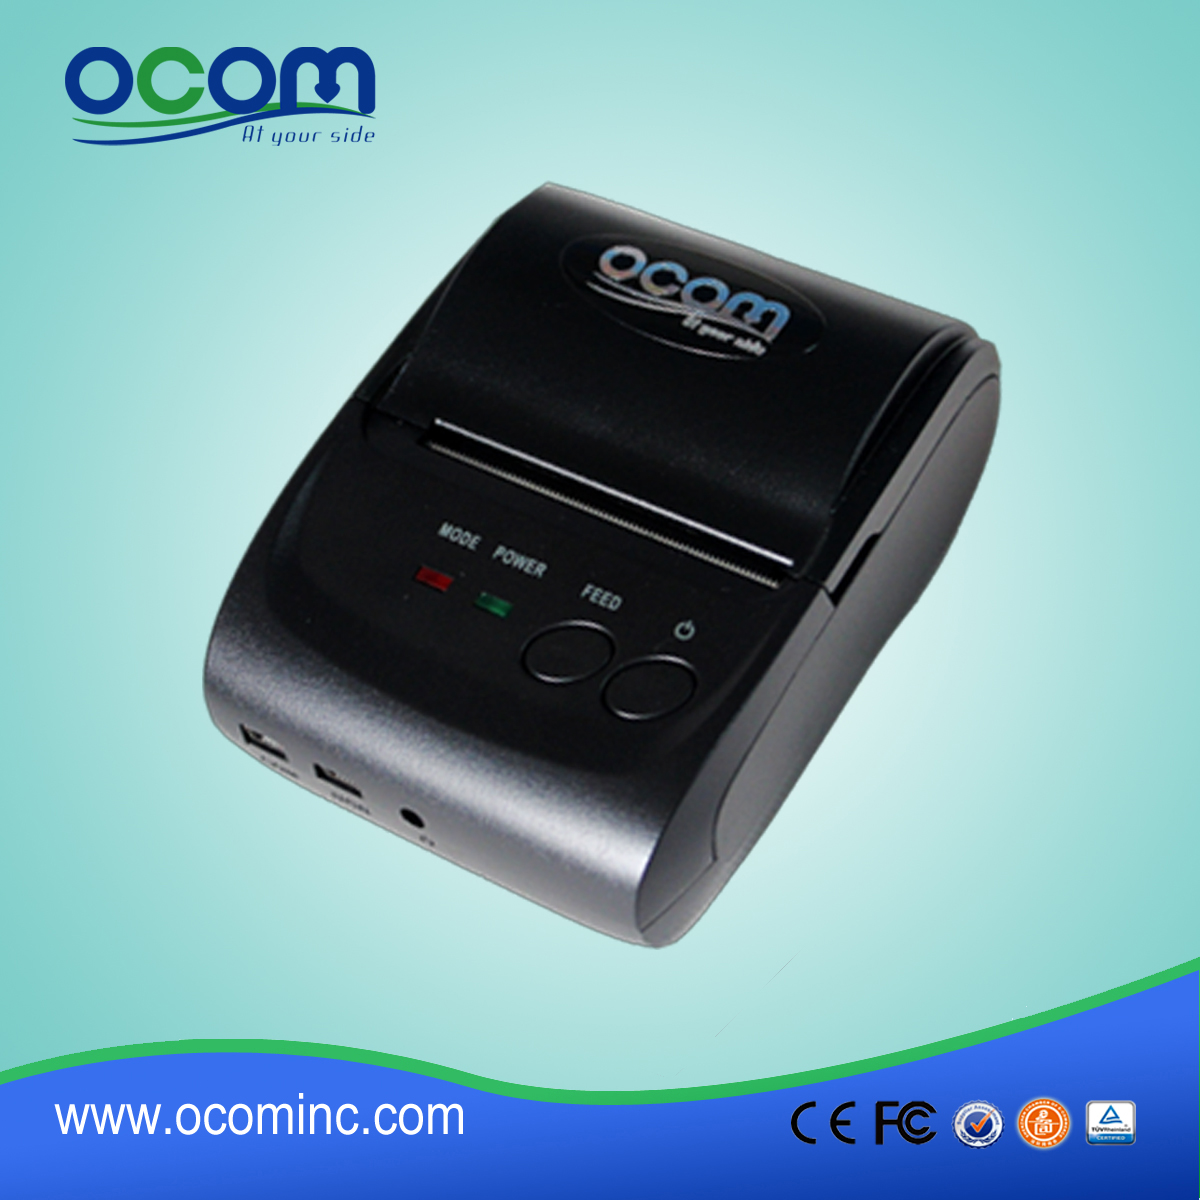 OCPP-M05: de haute qualité imprimante Pos Pilote thermique, imprimante thermique